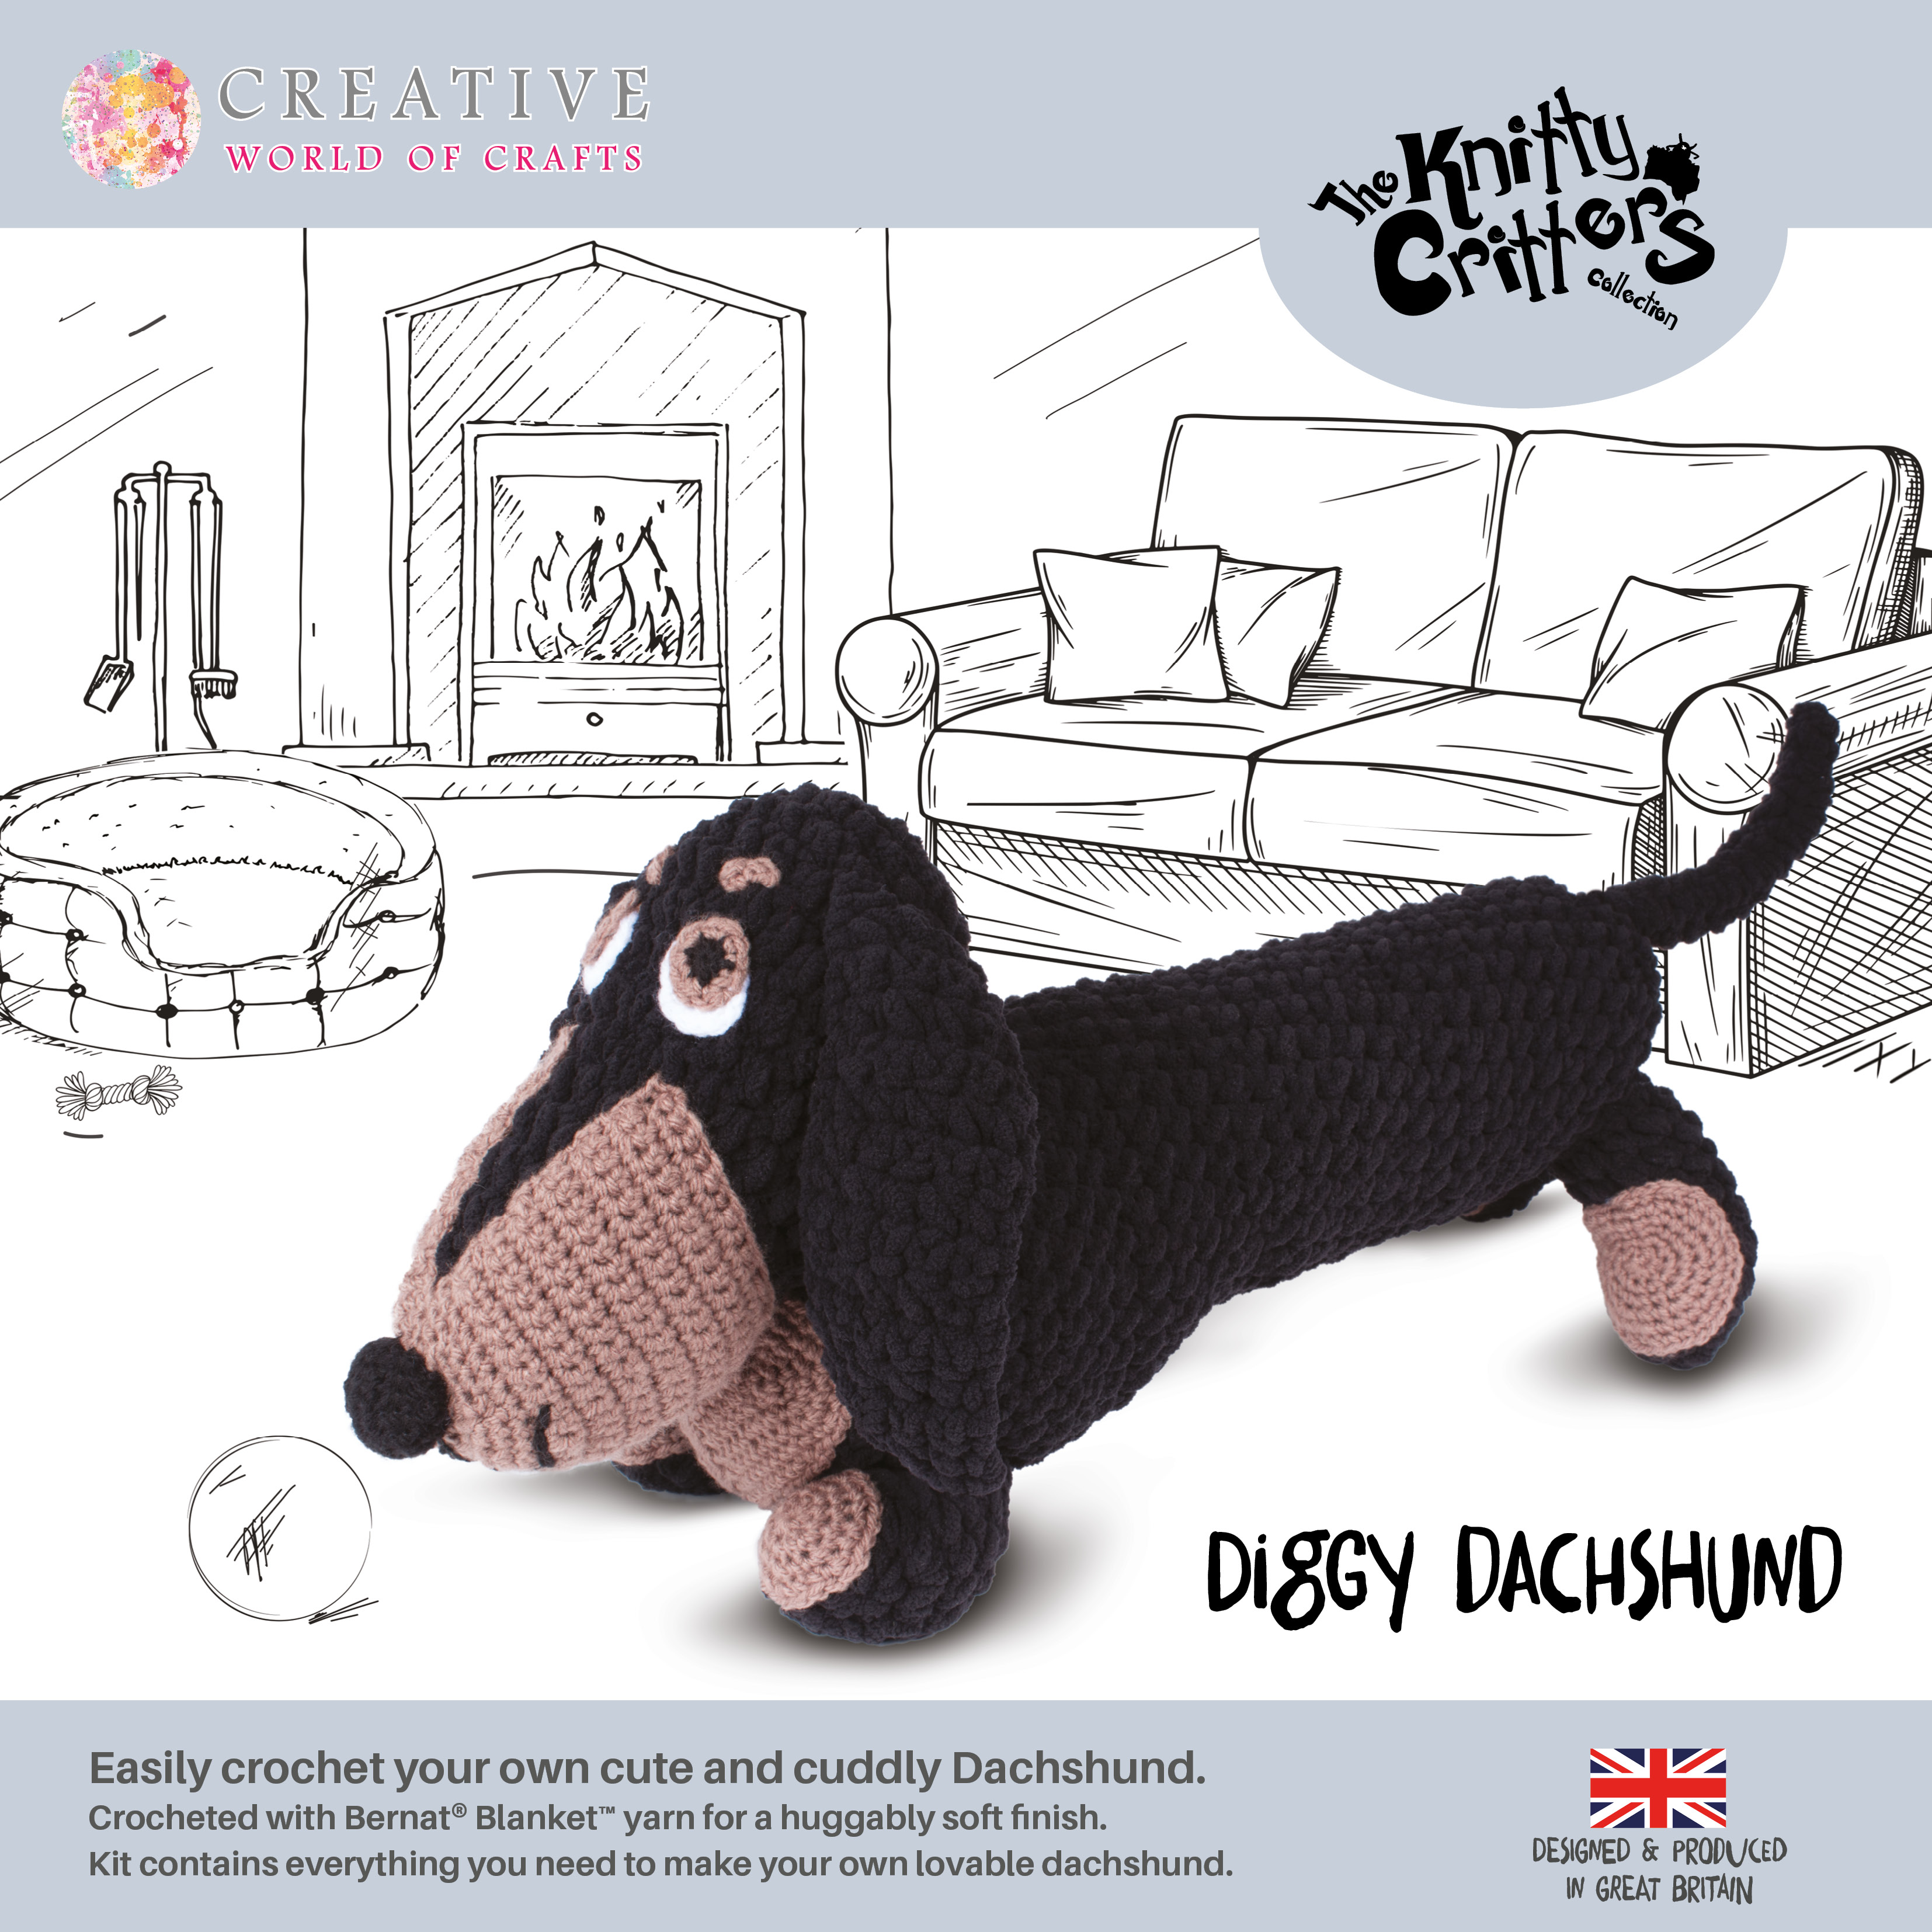 Knitty Critters - Dachshund - Diggy